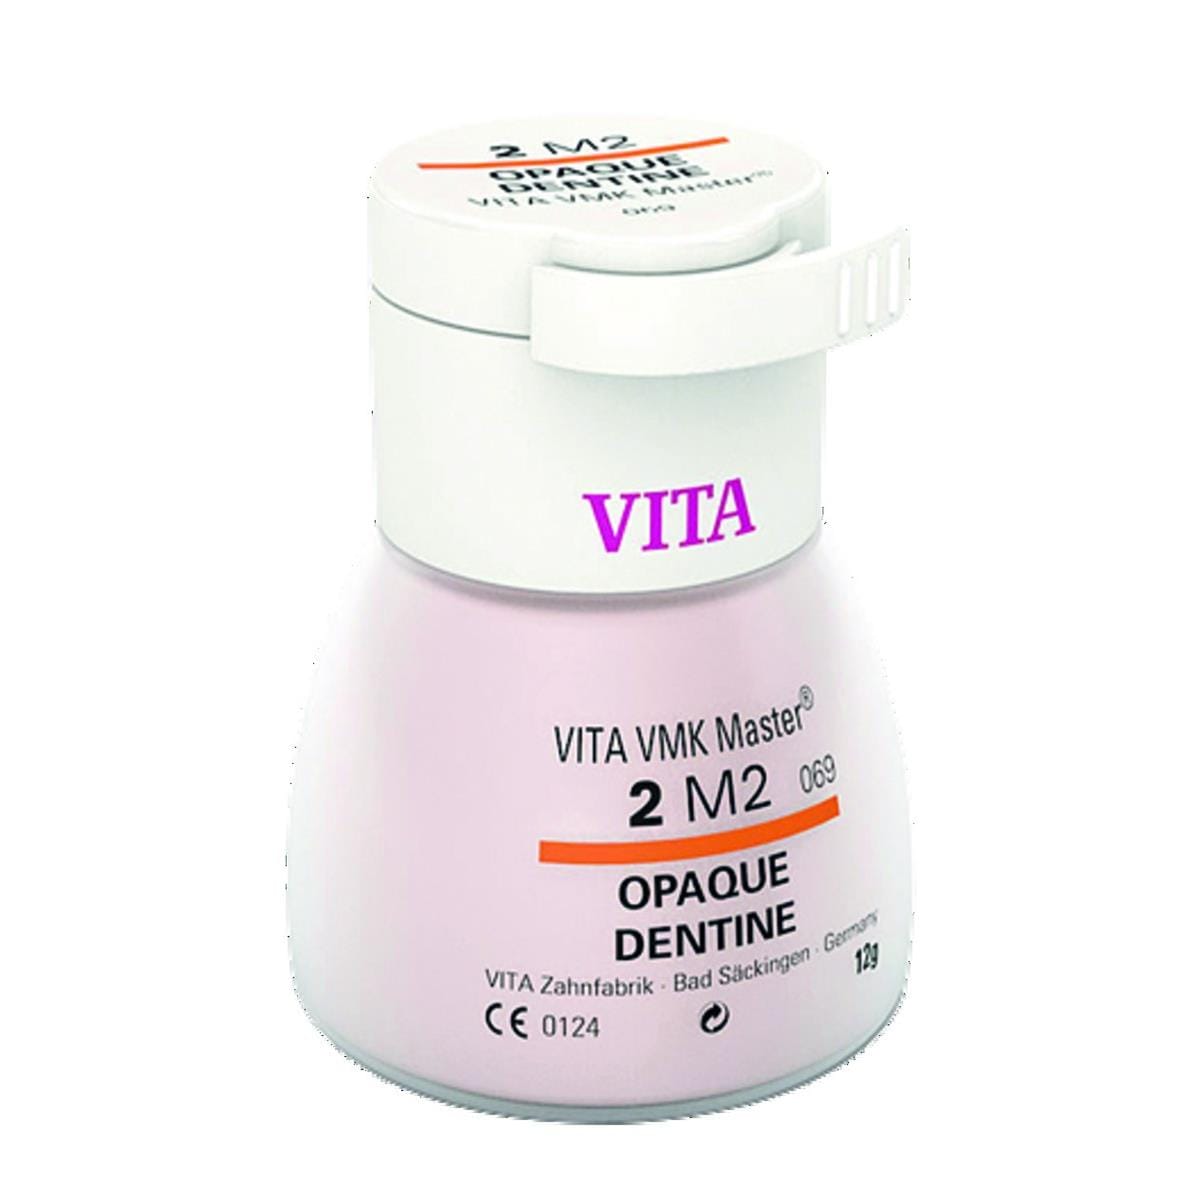 VMK Master VITA - Dentine Opaque - 5M3 - Le flacon de 12 g